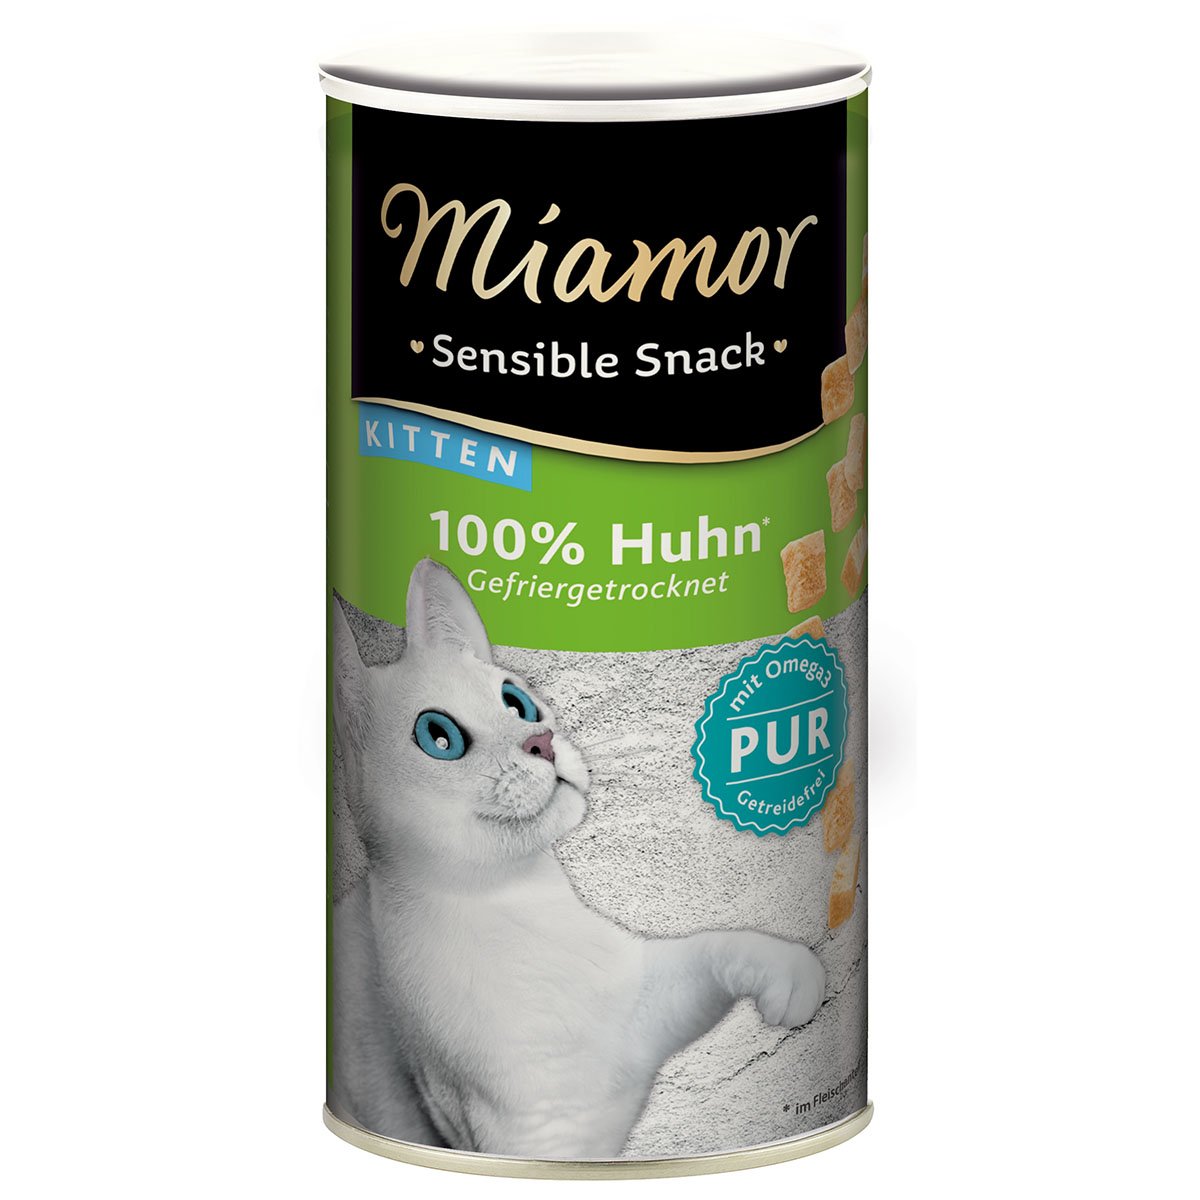 Miamor Sensible Snack Kitten Huhn Pur 24x30g